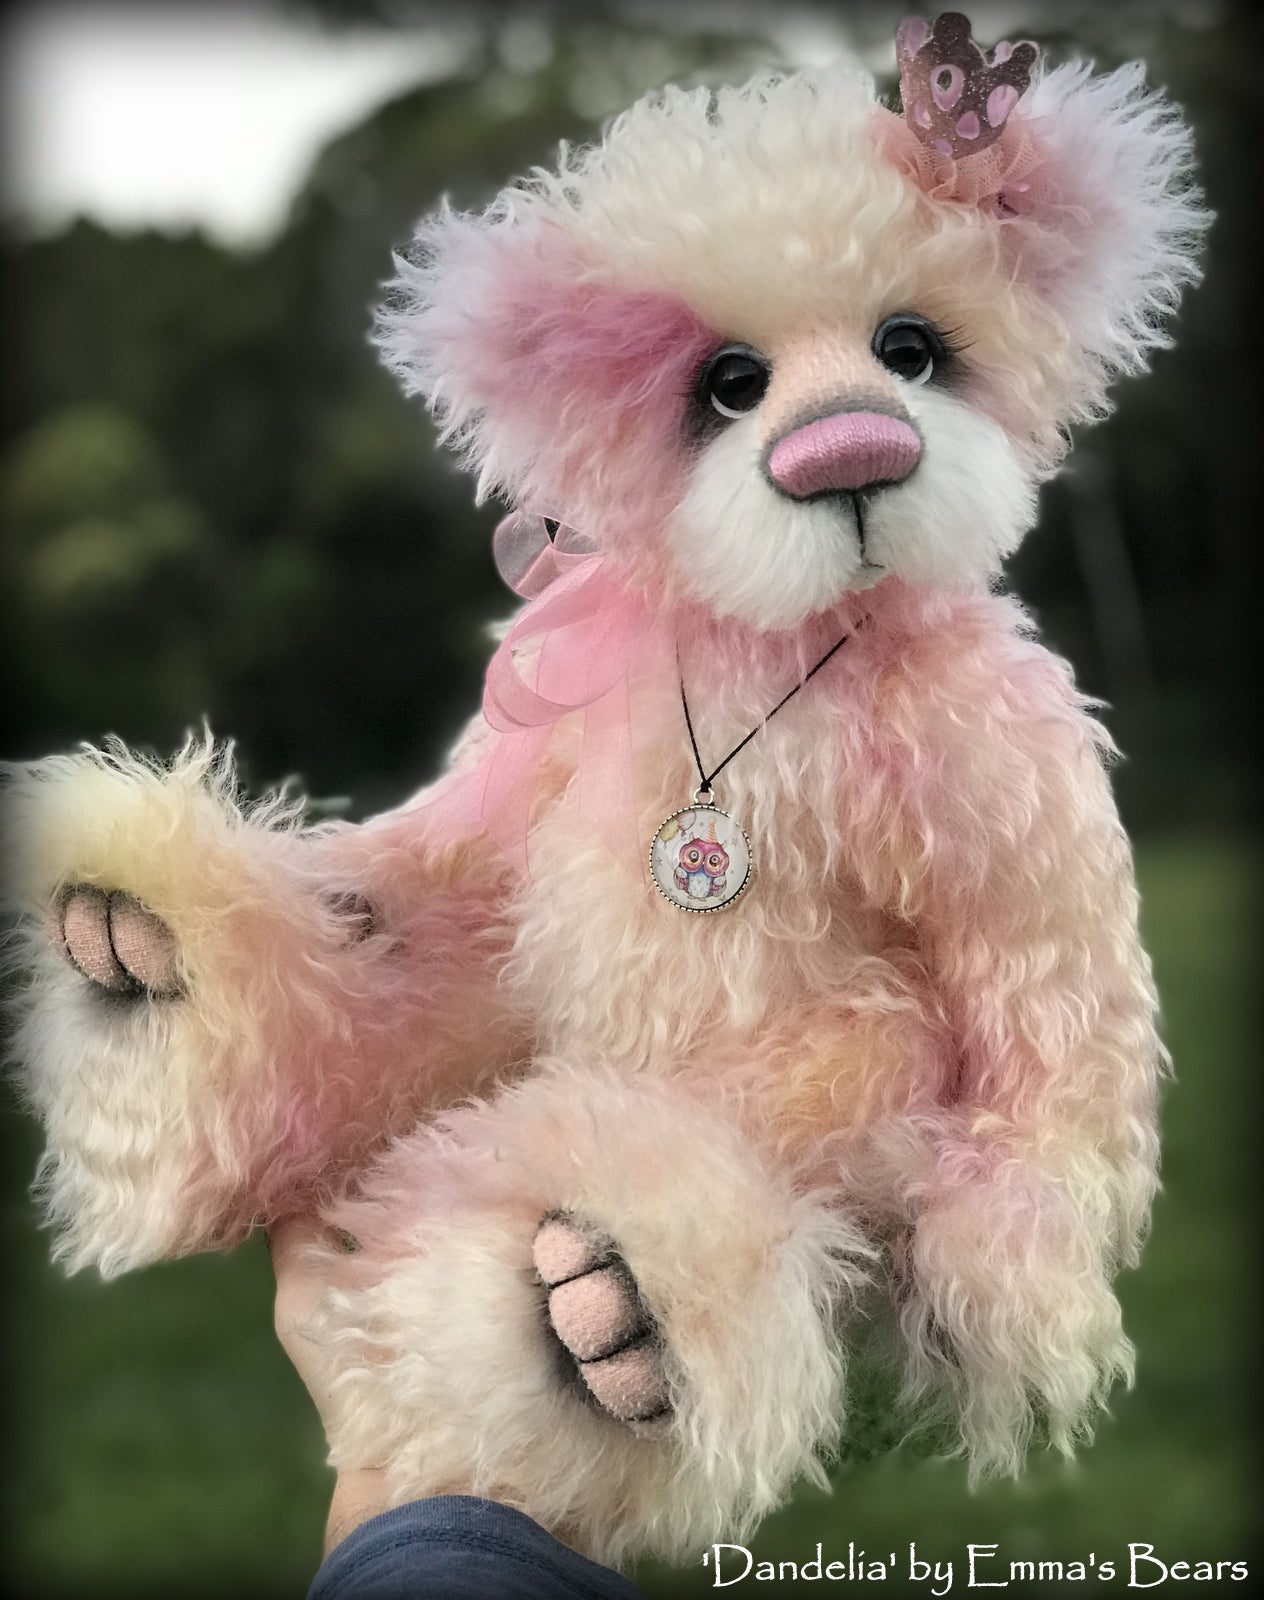 Dandelia - 16" hand-dyed mohair Artist Bear by Emma's Bears - OOAK